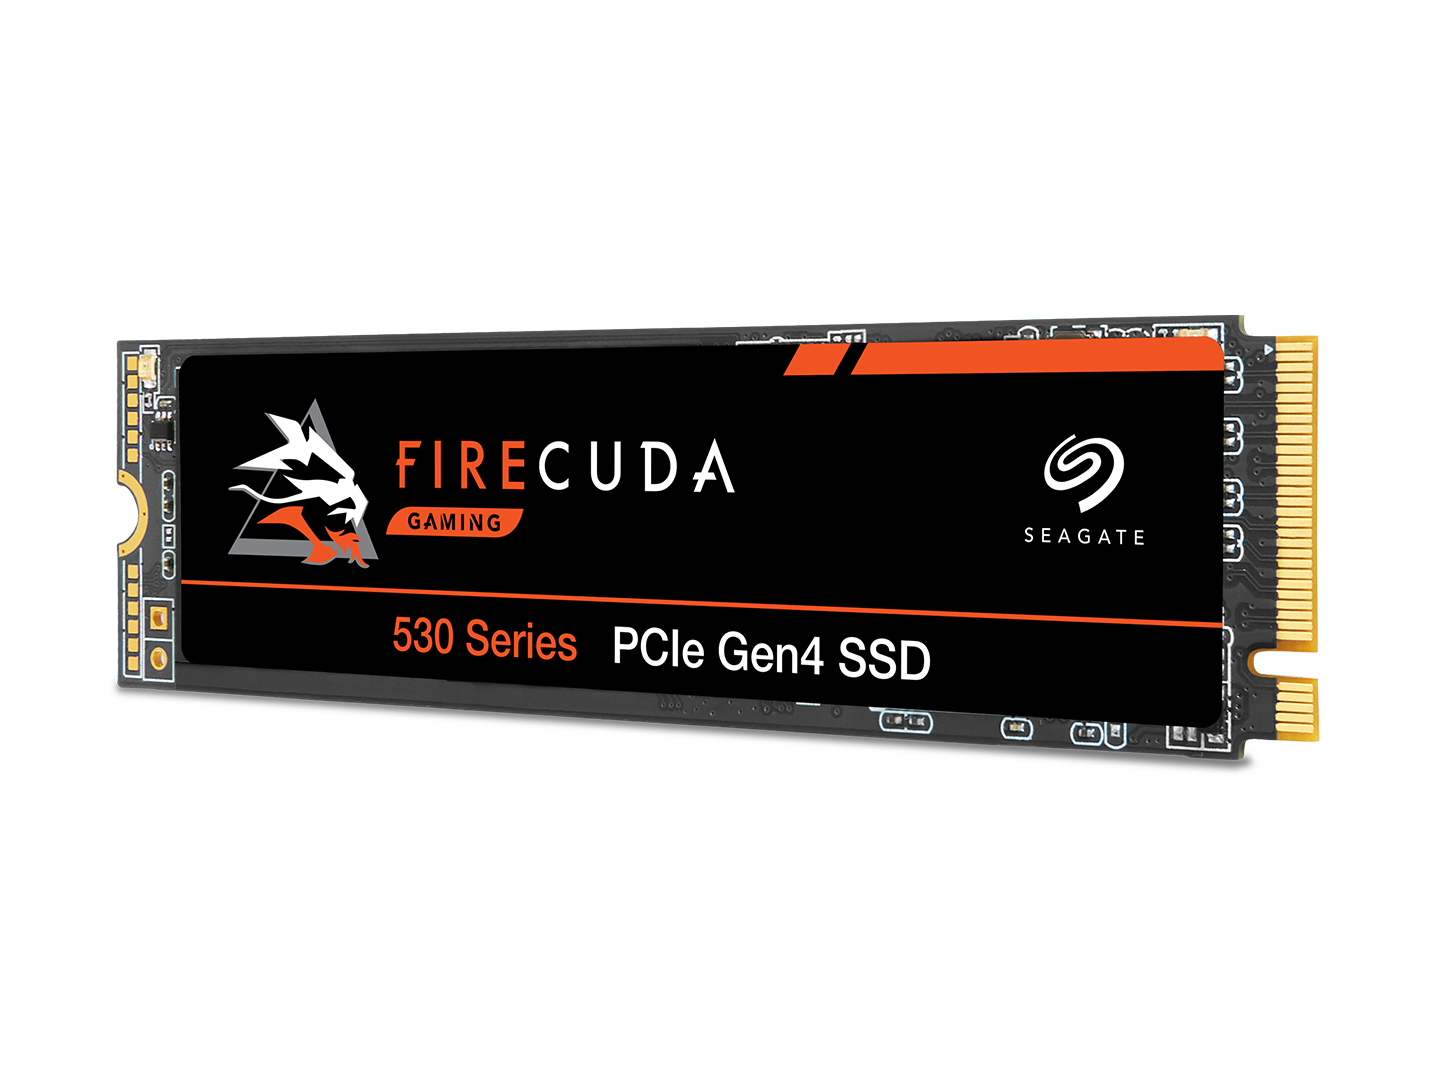 Seagate FireCuda 520 NVMe PCie 4.0 x 4 SSD Review (1TB)